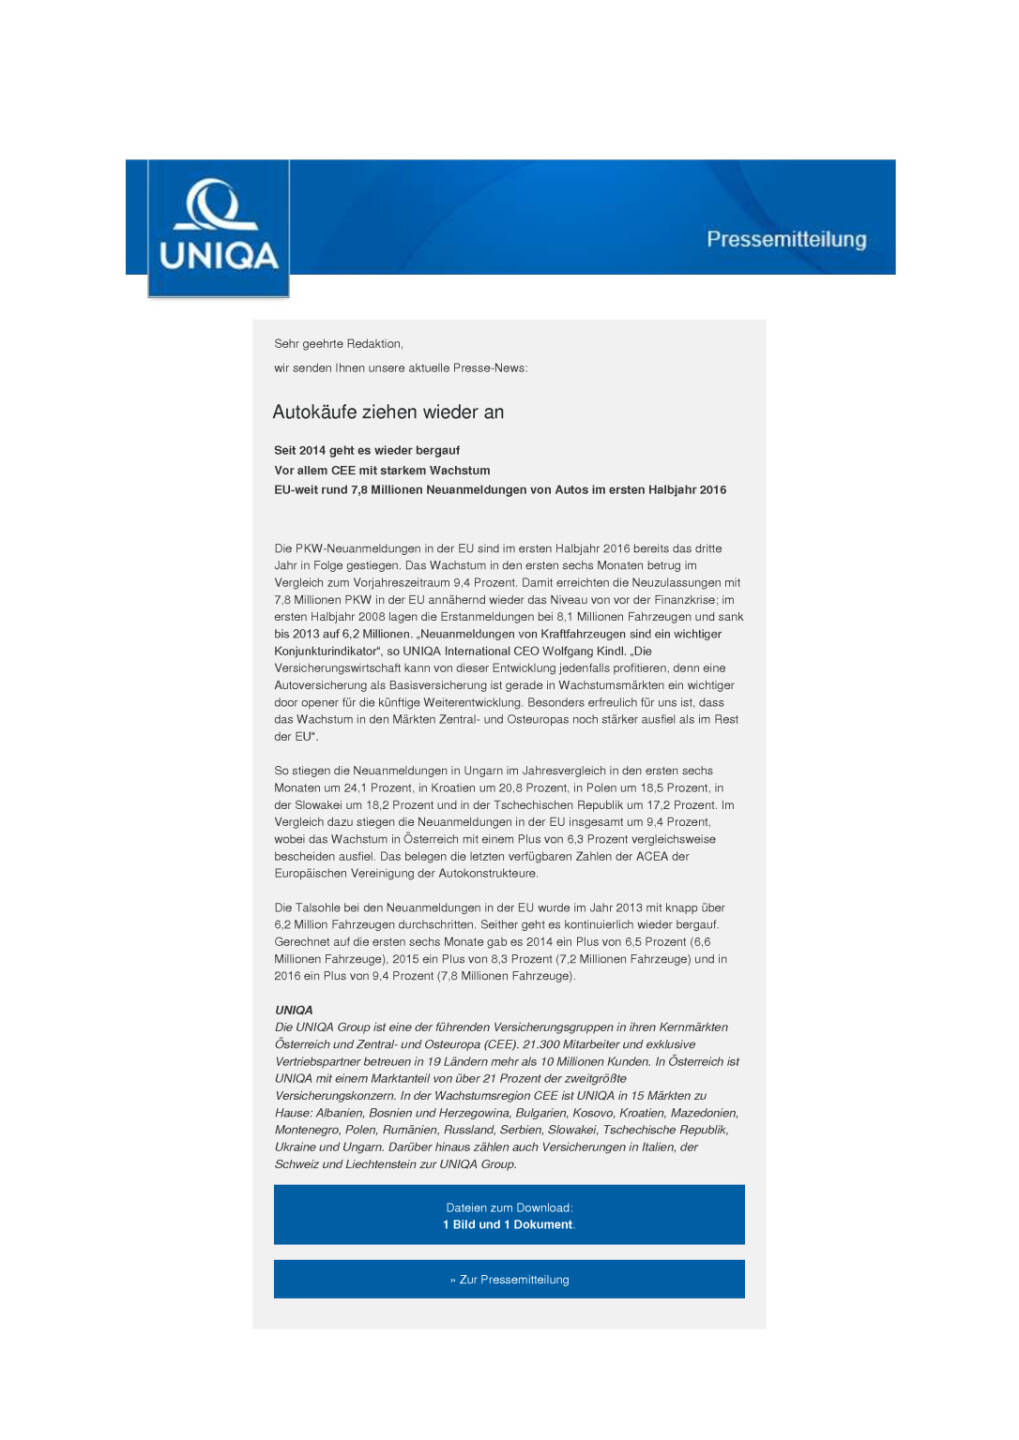 Uniqa: Autokäufe ziehen wieder an, Seite 1/2, komplettes Dokument unter http://boerse-social.com/static/uploads/file_1547_uniqa_autokaufe_ziehen_wieder_an.pdf